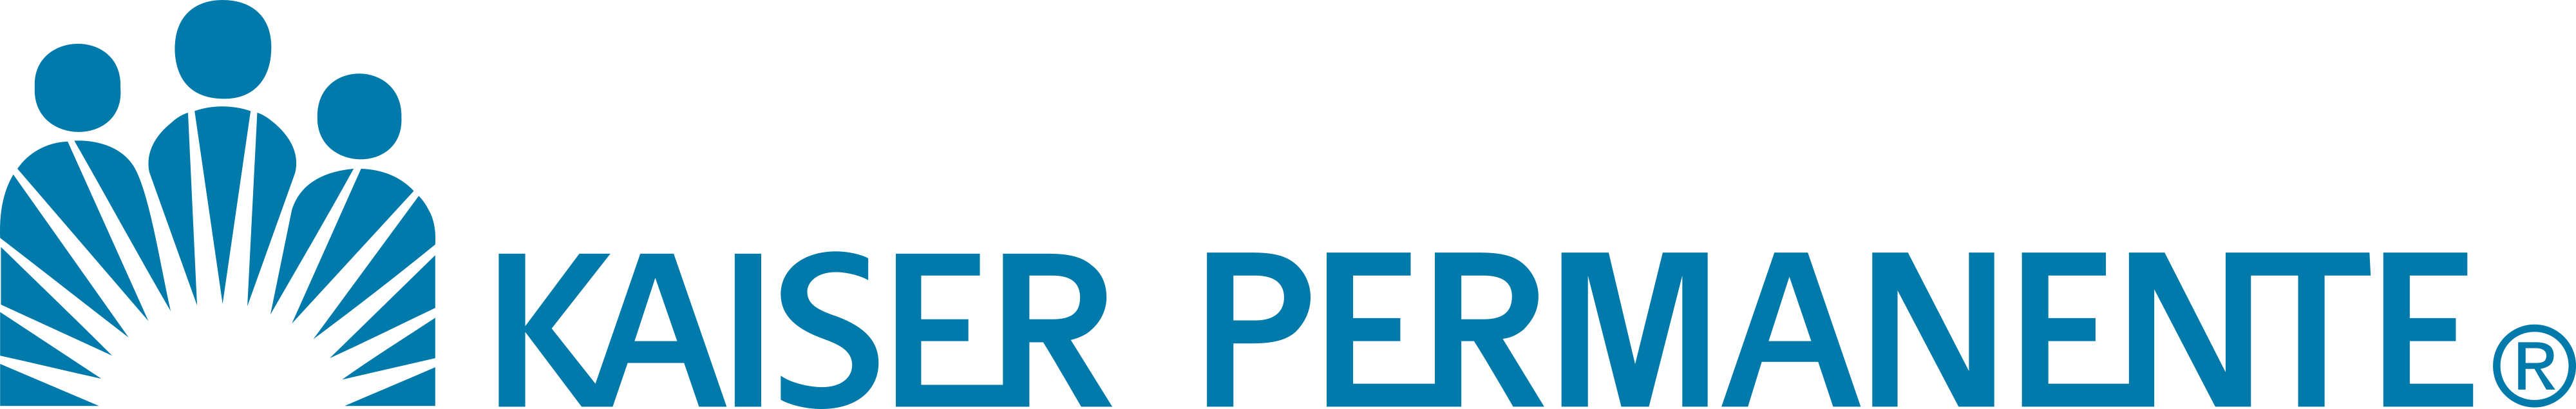 Kaiser Permanente logo - download.